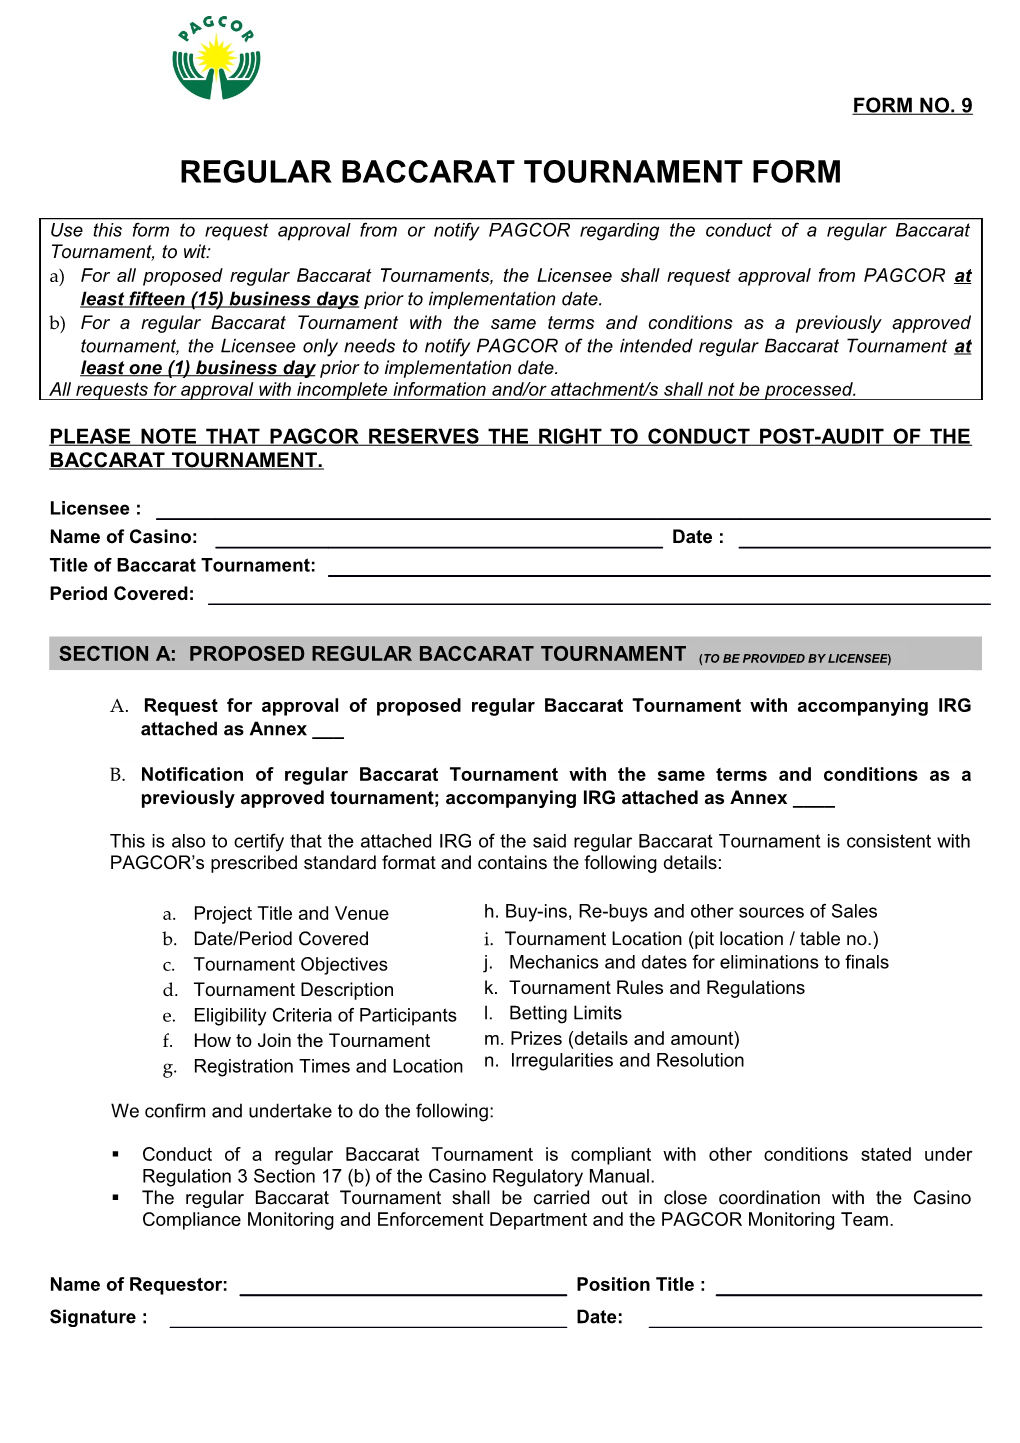 Regular Baccarat Tournament Form